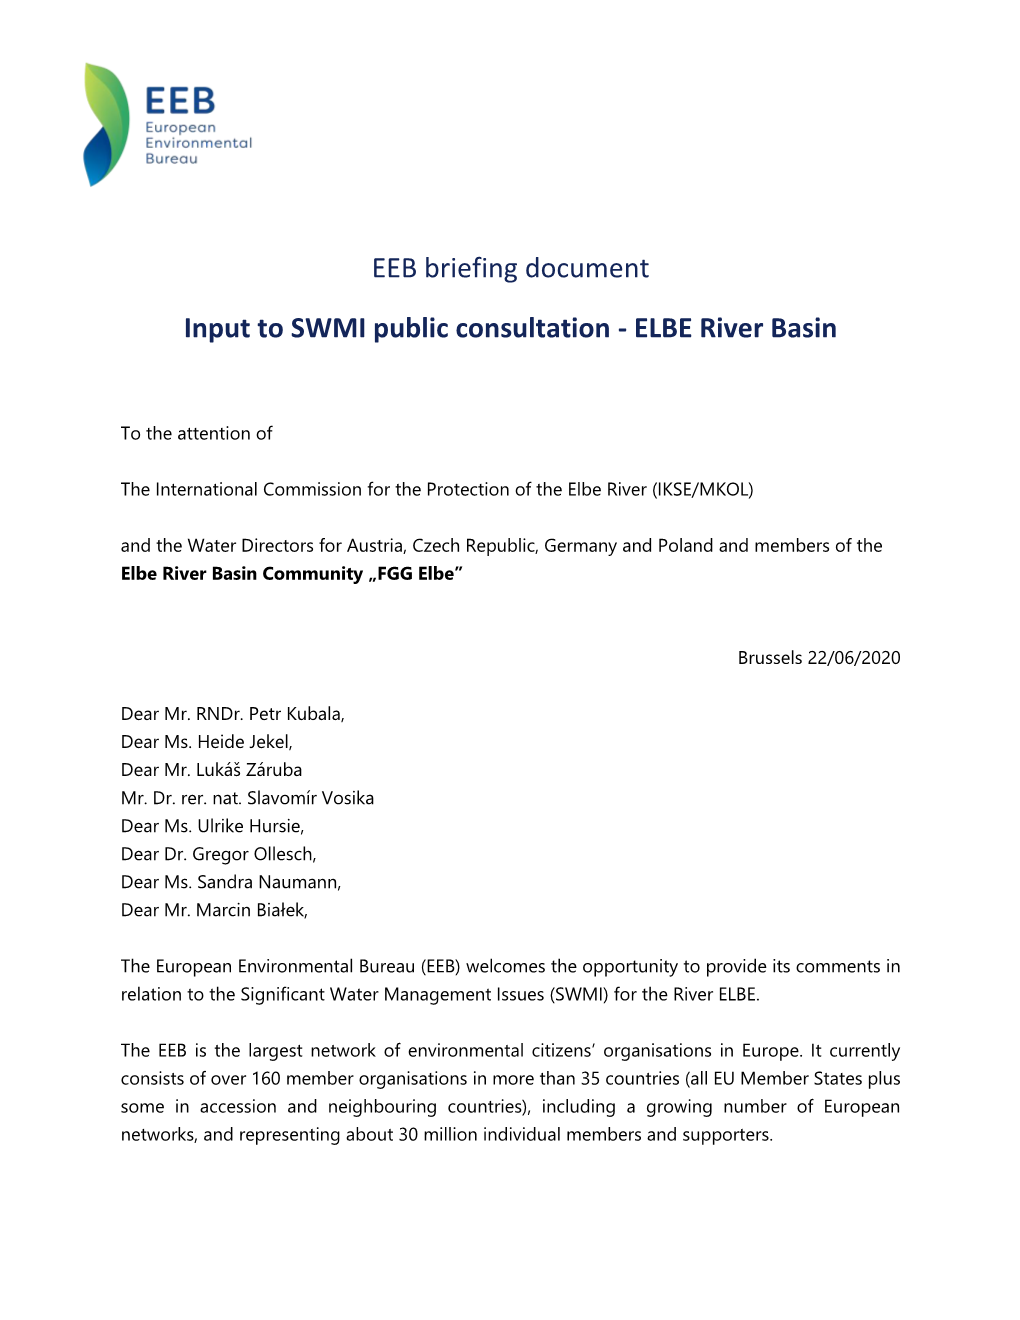 EEB Briefing Document Input to SWMI Public Consultation - ELBE River Basin